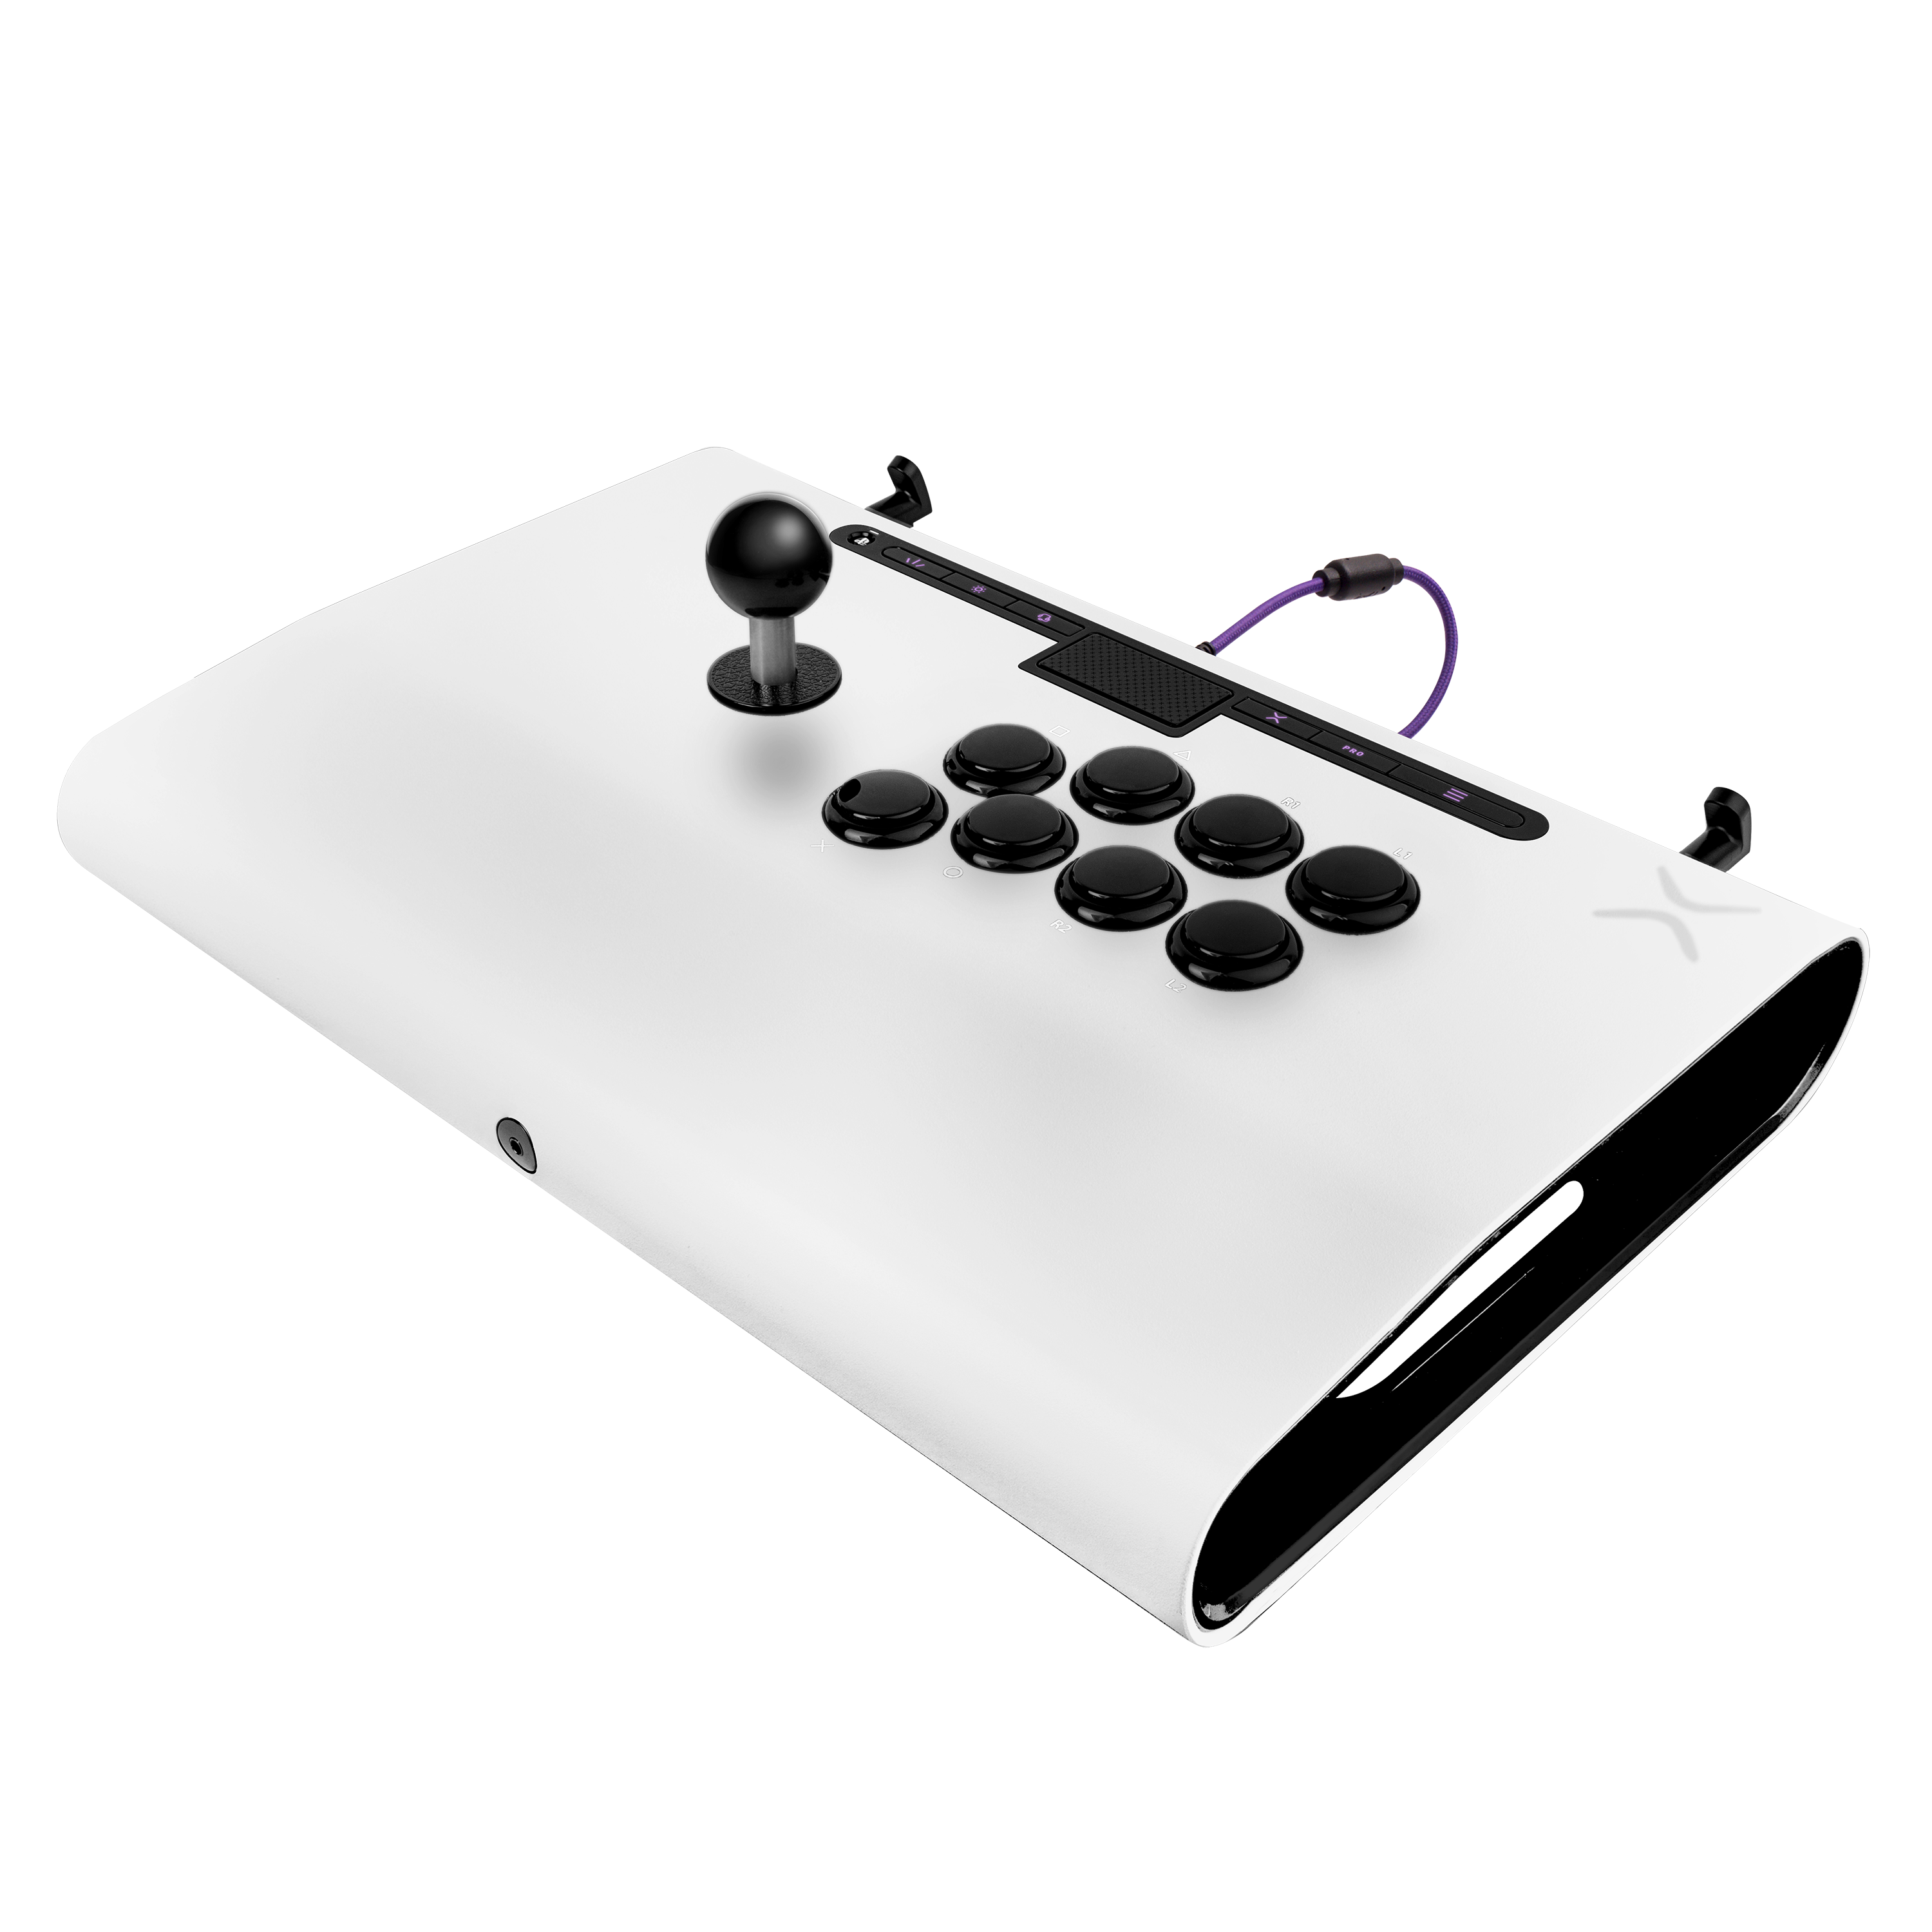 PlayStation 4/5 & PC Victrix PRO FS Arcade Fight Stick: White